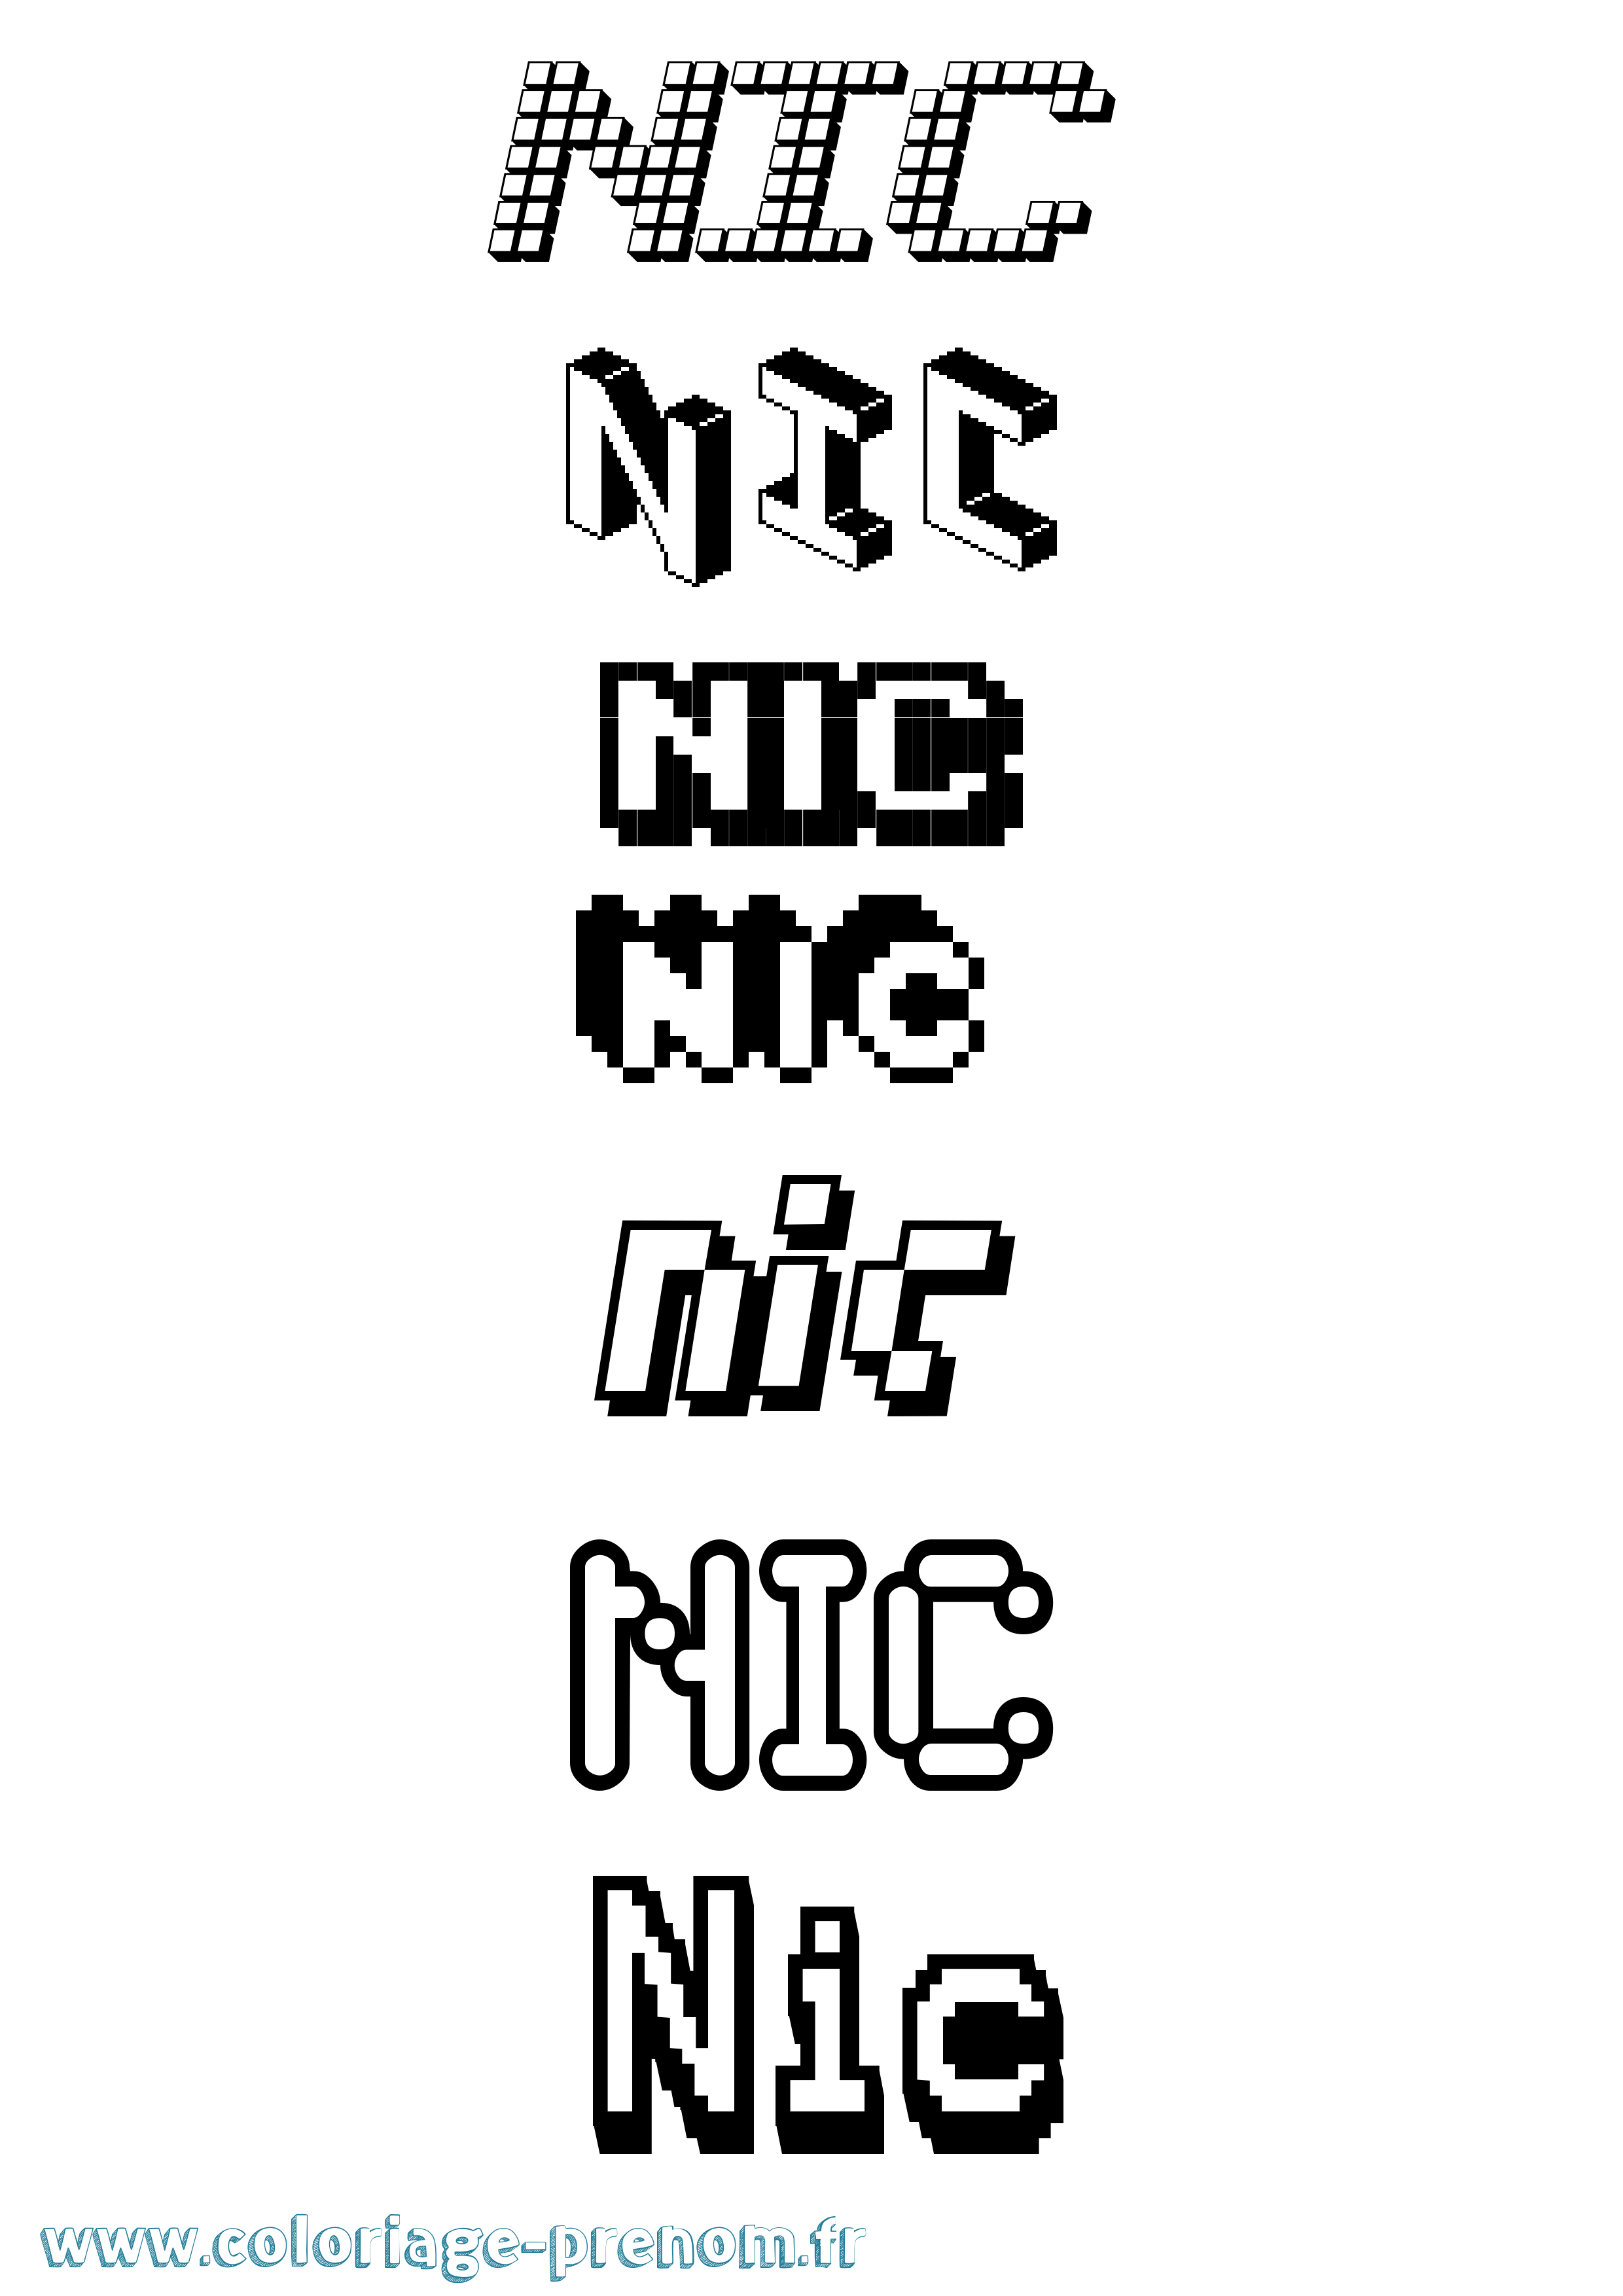 Coloriage prénom Nic Pixel